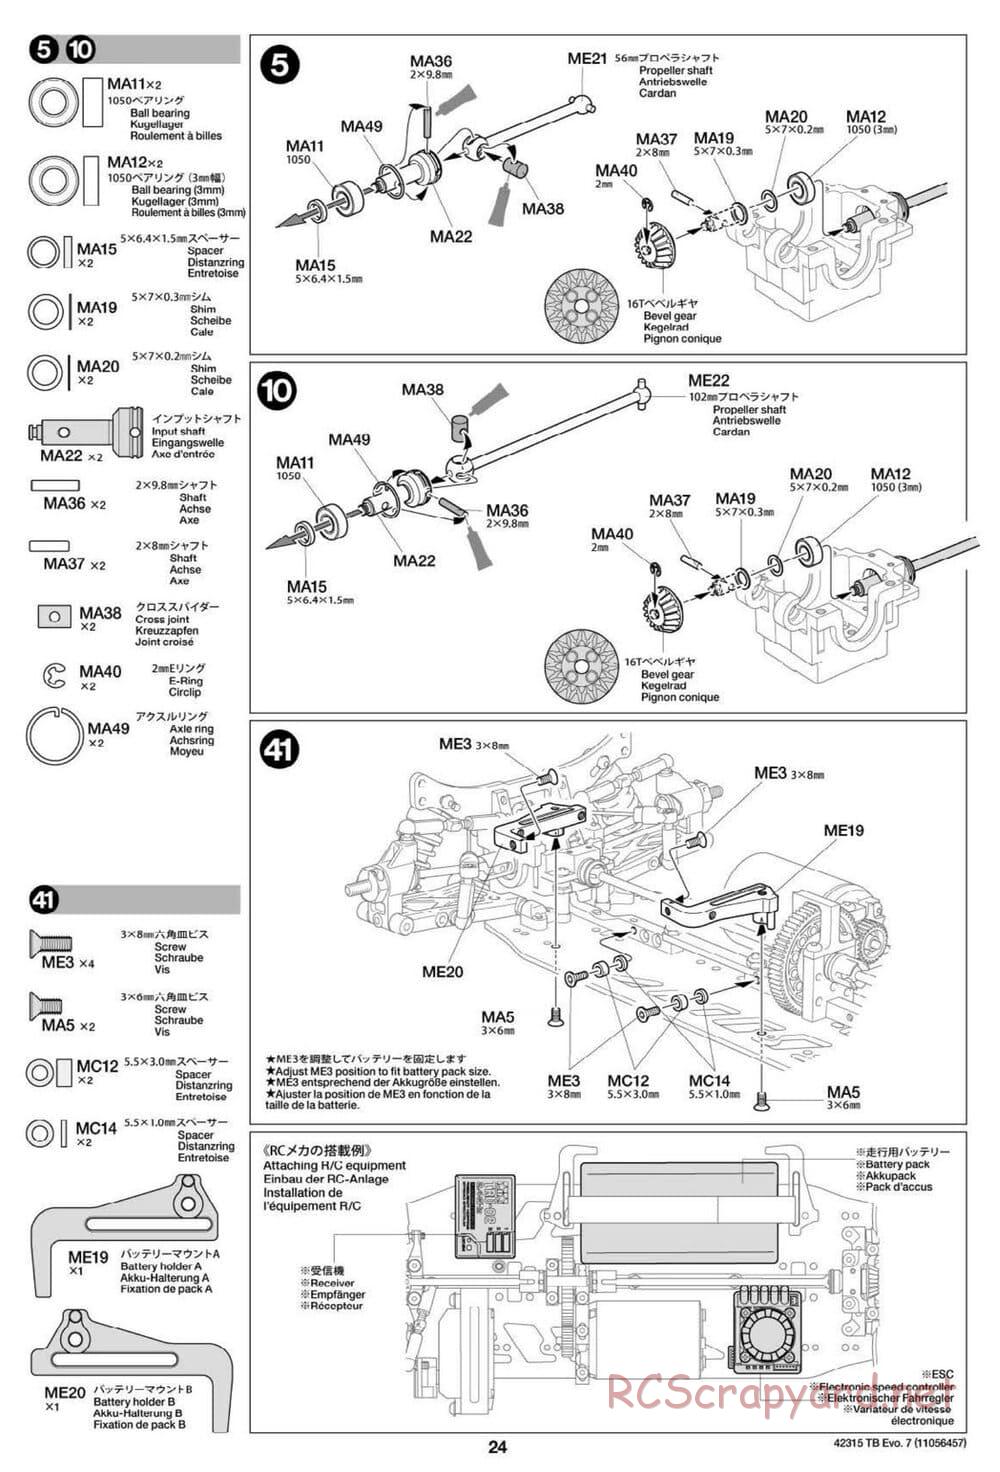 Tamiya - TB Evo.7 Chassis - Manual - Page 24